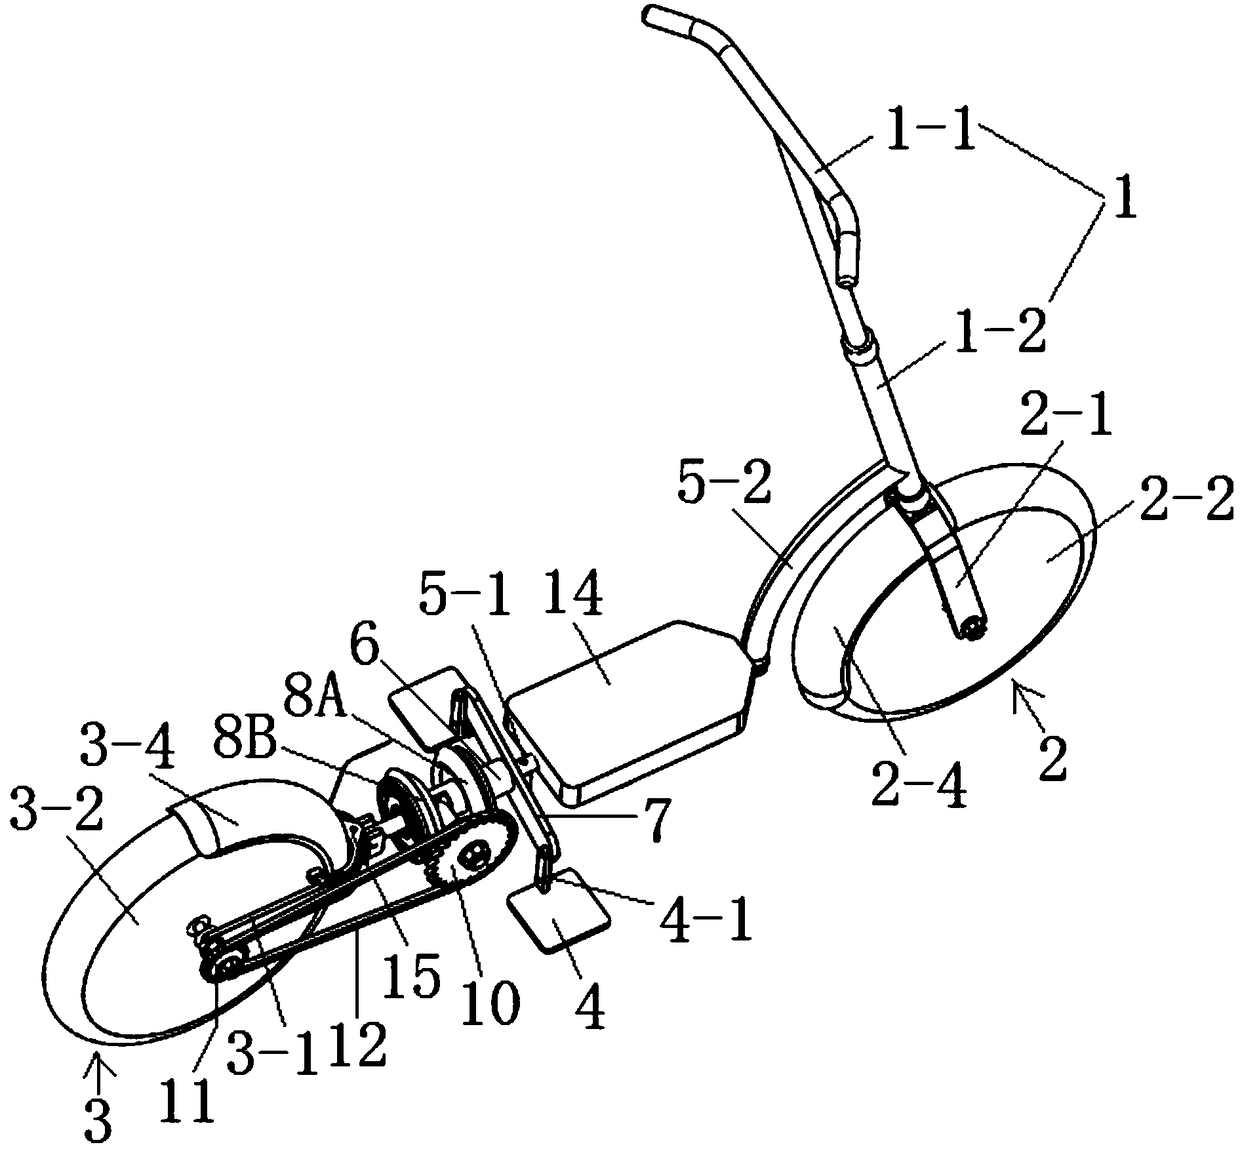 Vertical step type bicycle